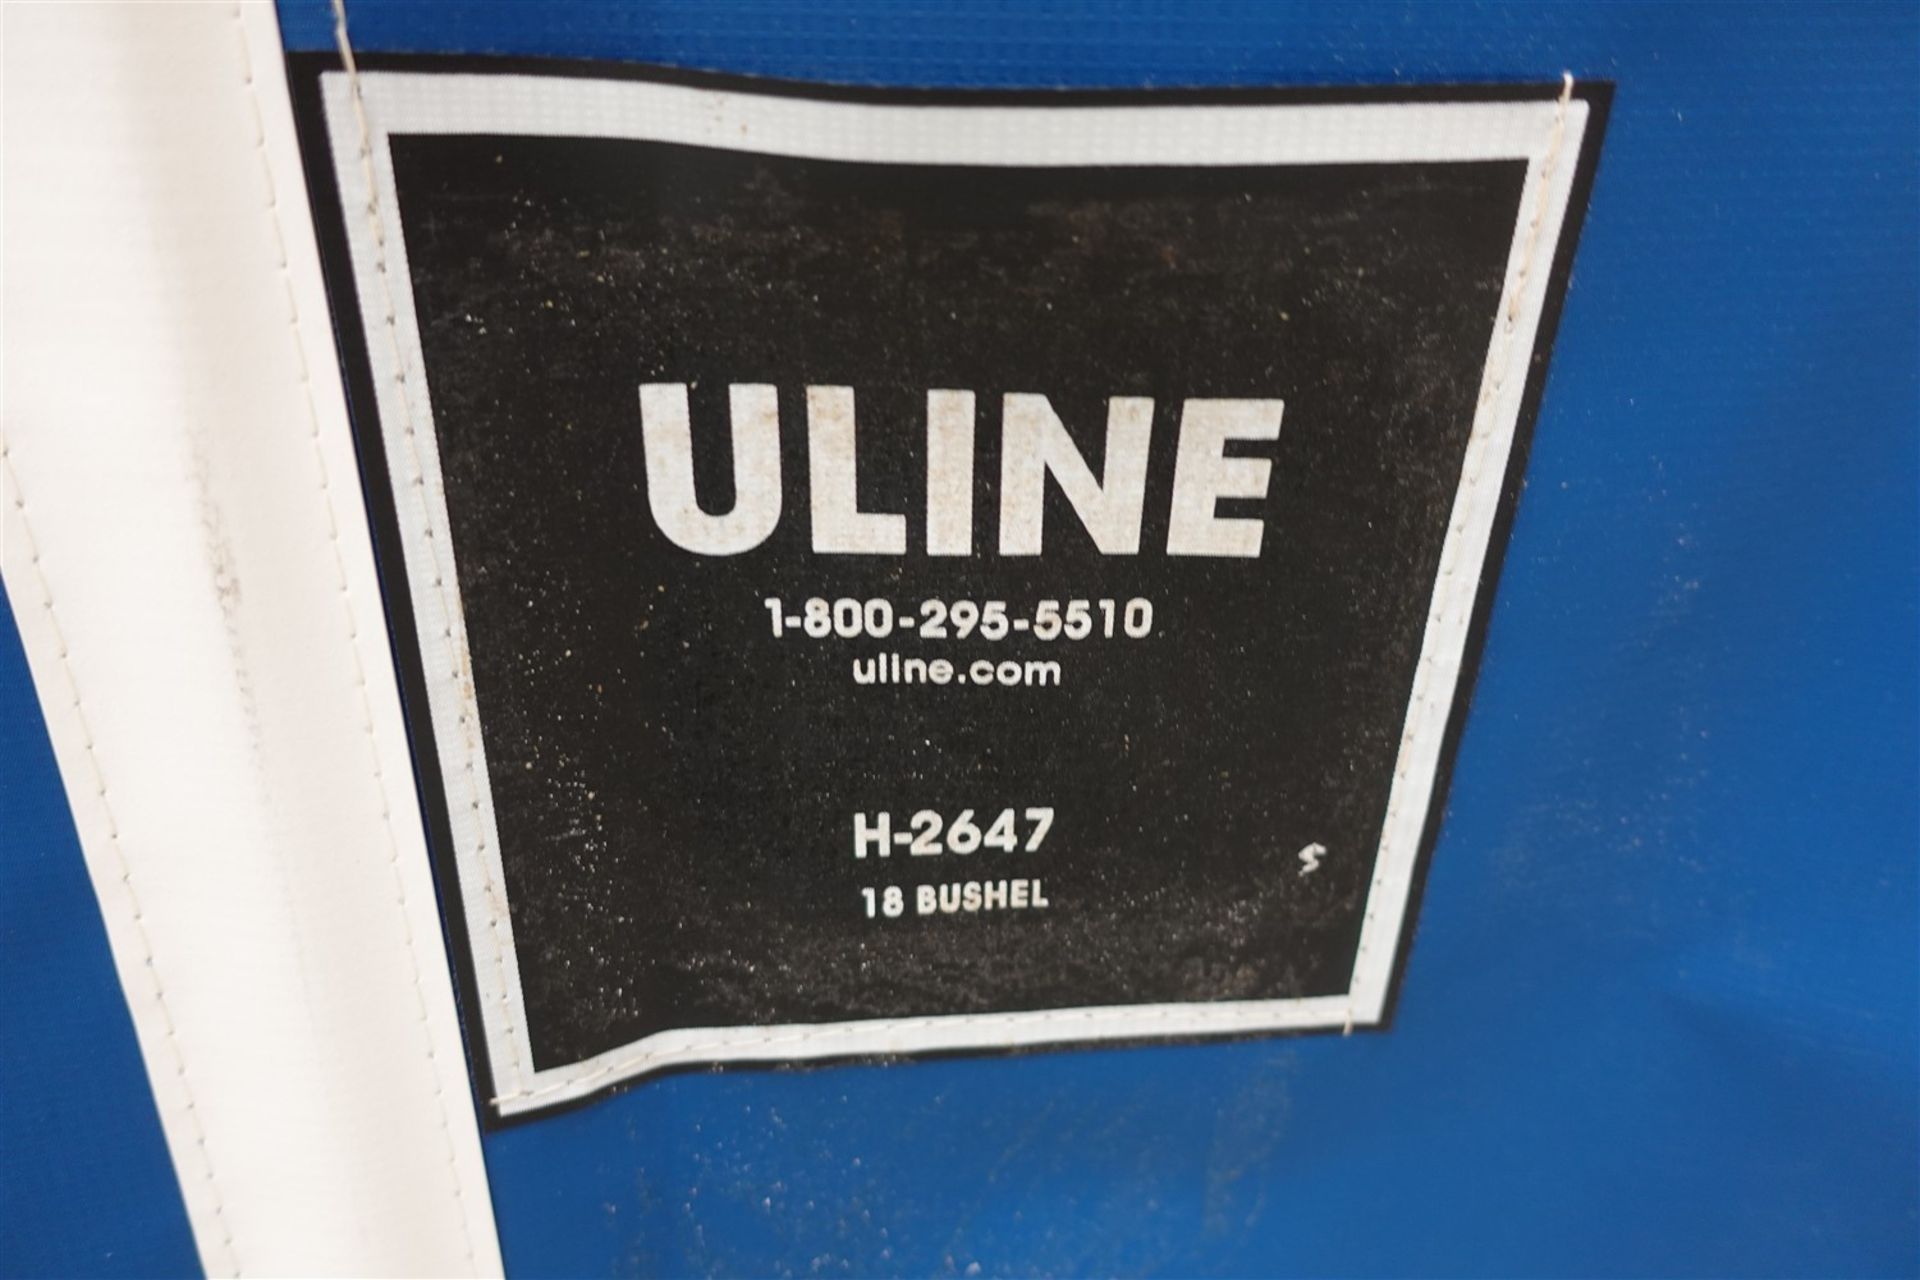 ULINE BLUE VINYL BASKET TRUCK - 18 BUSHEL, 42 IN. X 30 IN. MOD. H-2647 - Image 2 of 2